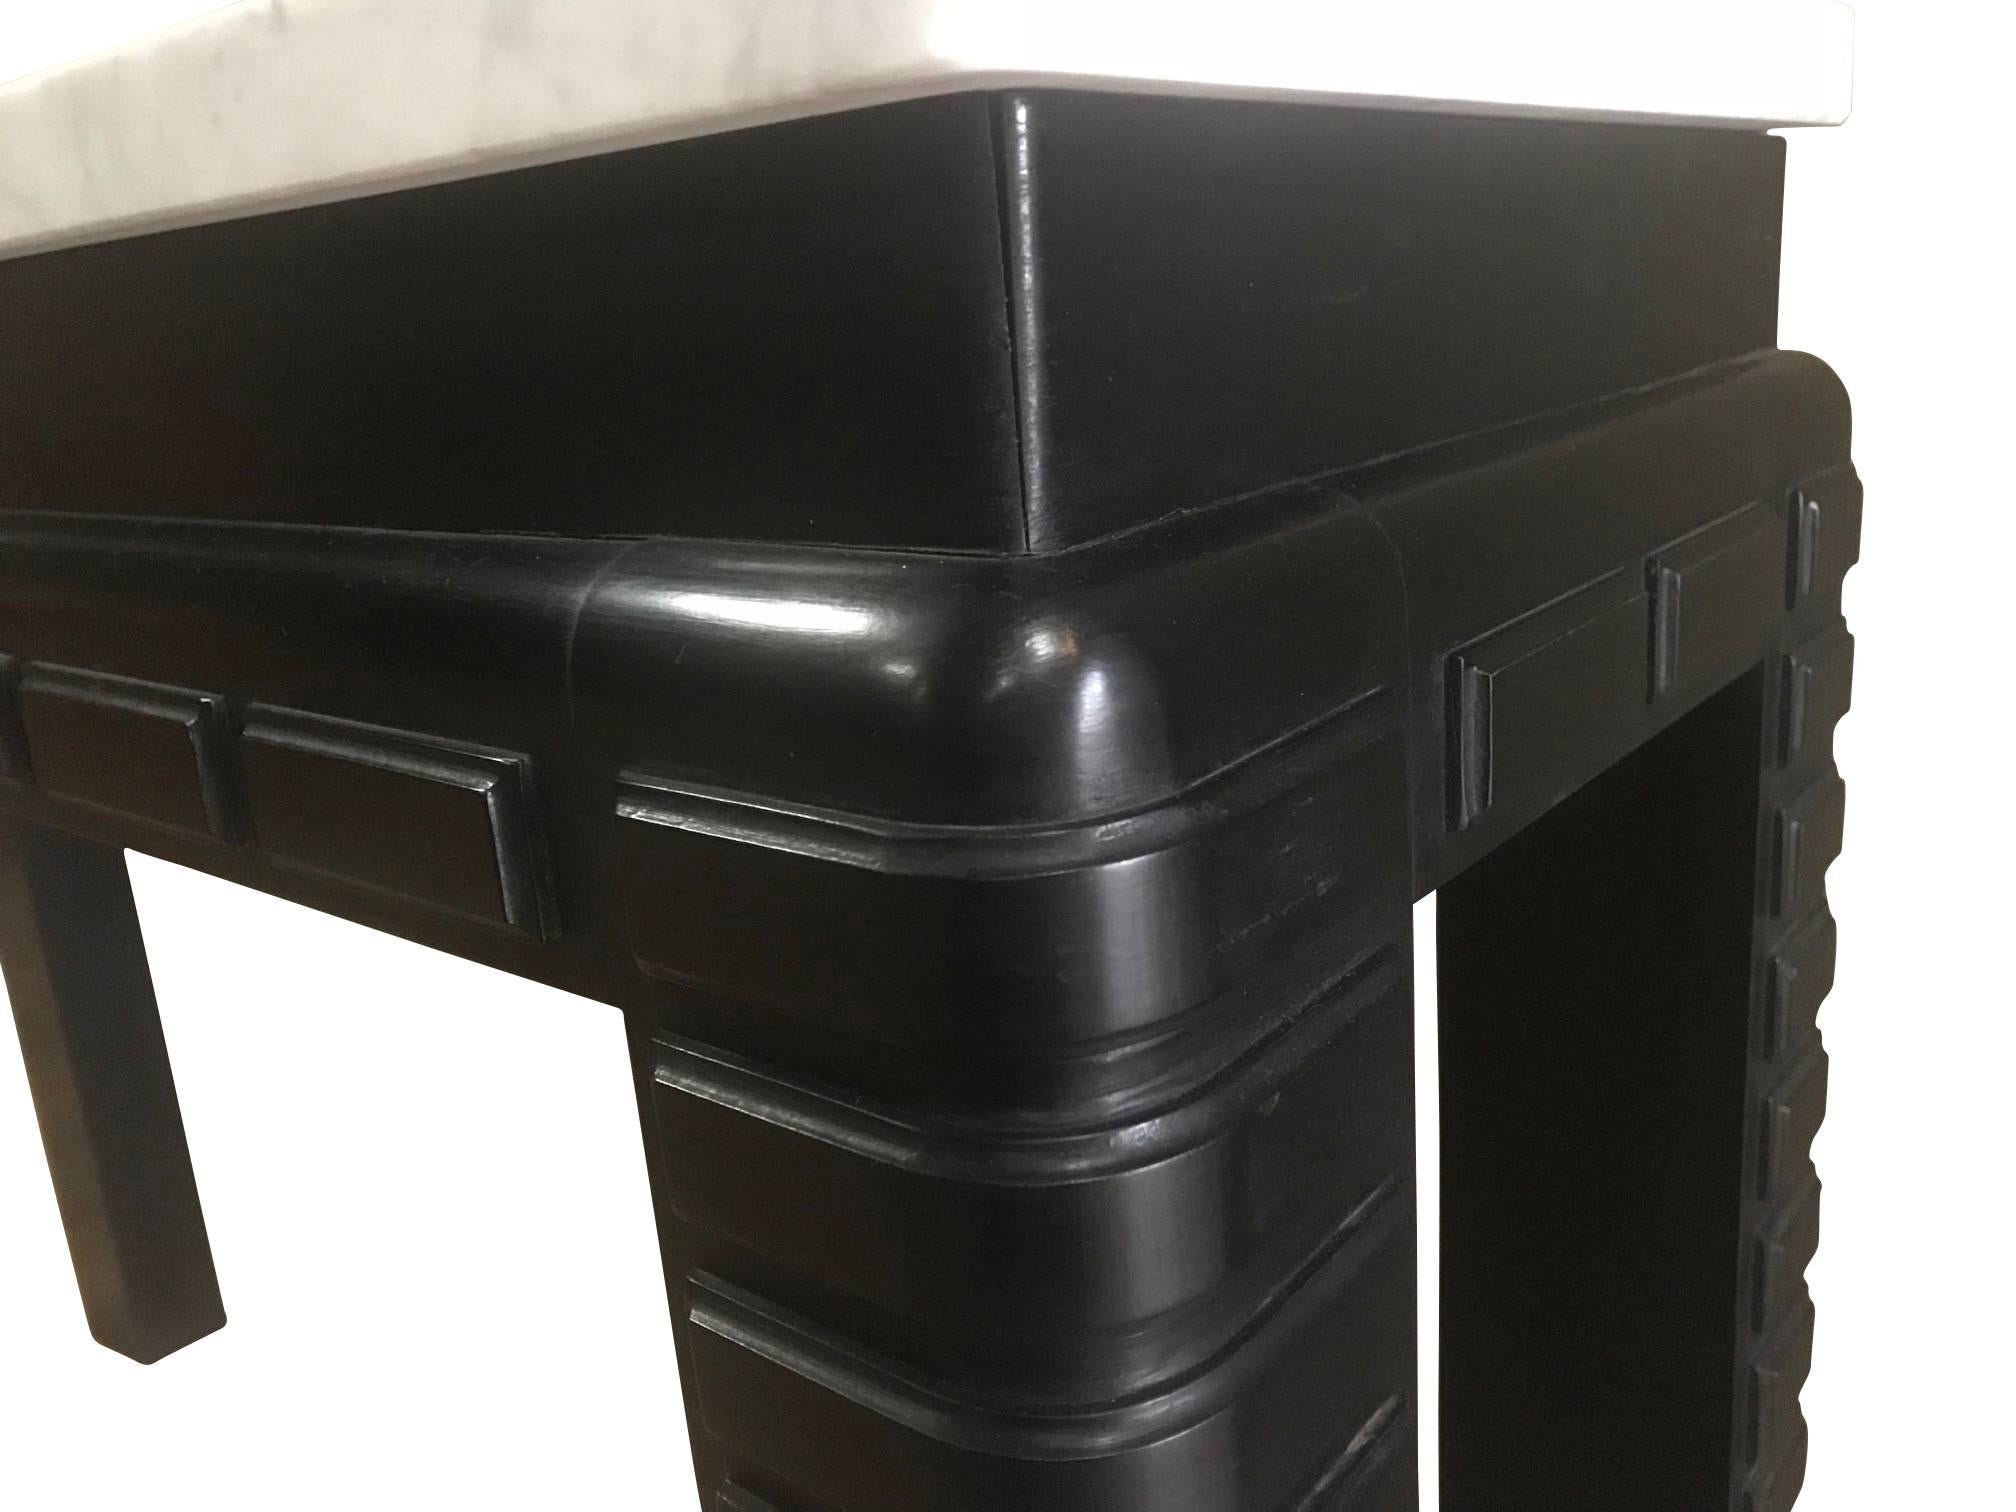 1930s, French ebonized mahogany base with decorative legs console table.
Thick Italian white carrara marble top.
